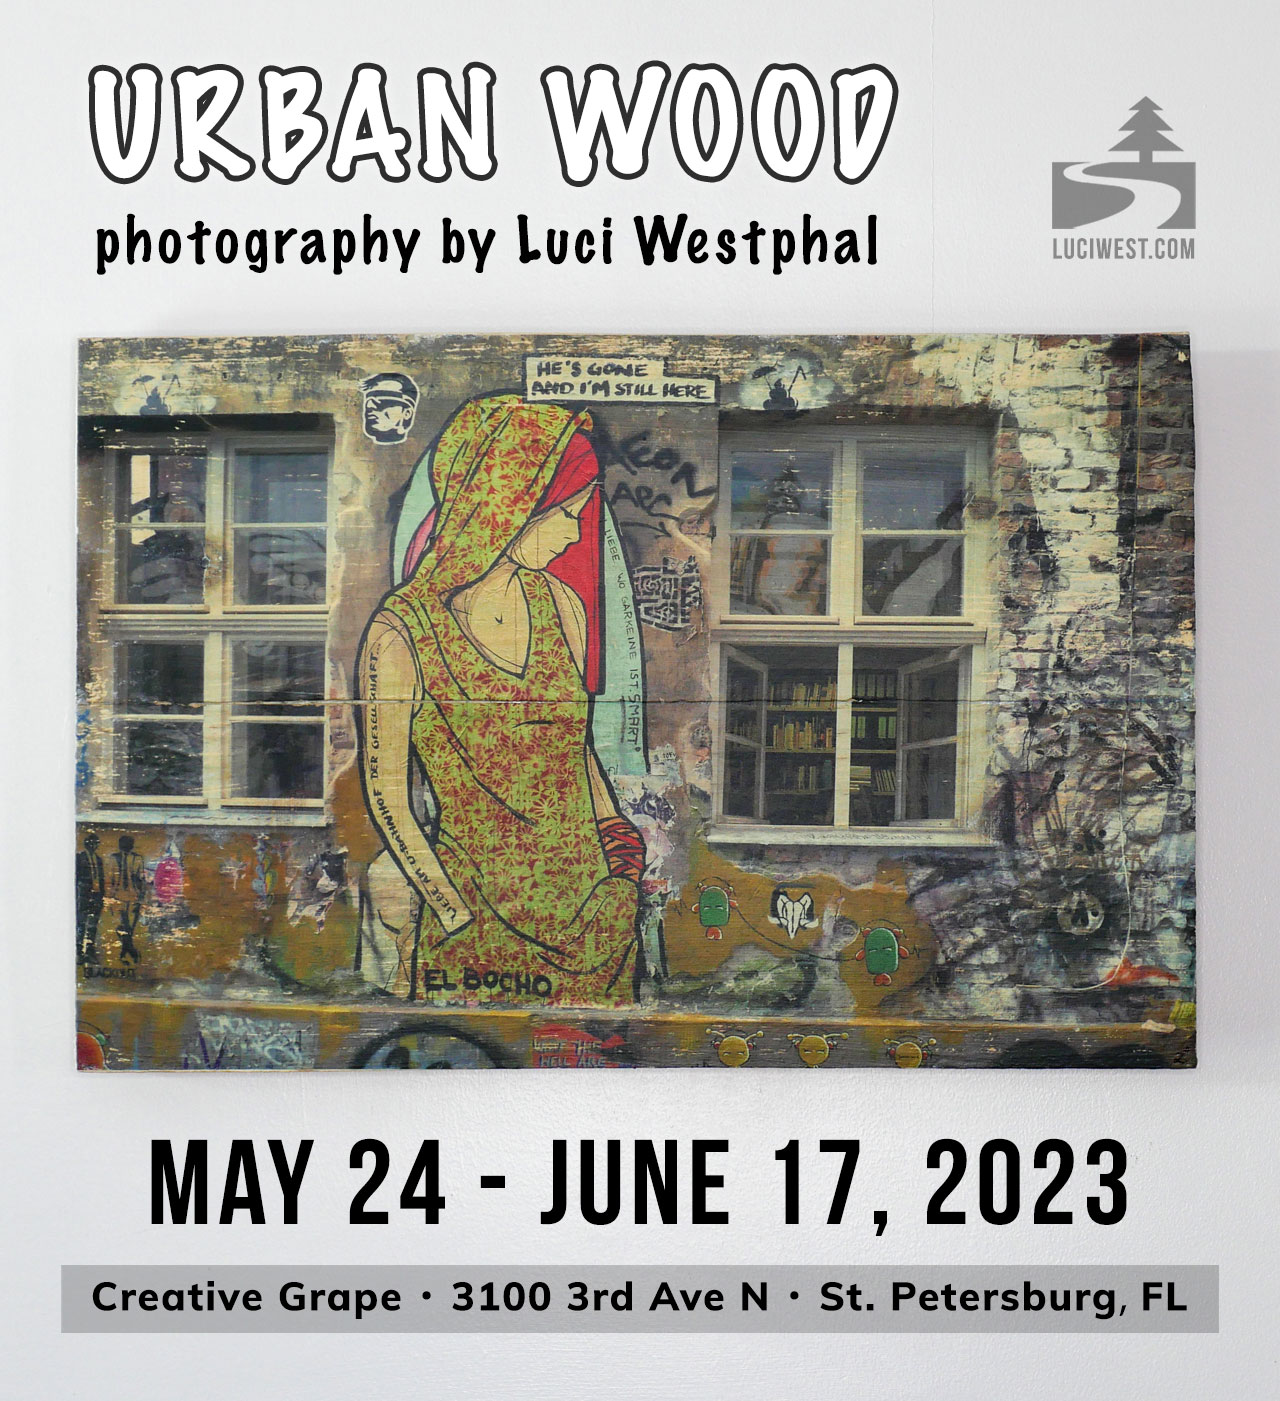 Urban Wood, Luci Westphal photography exhibit at Creative Grape, wood transfer, fence plank, street art, Berlin, book store, El Bocho, still here